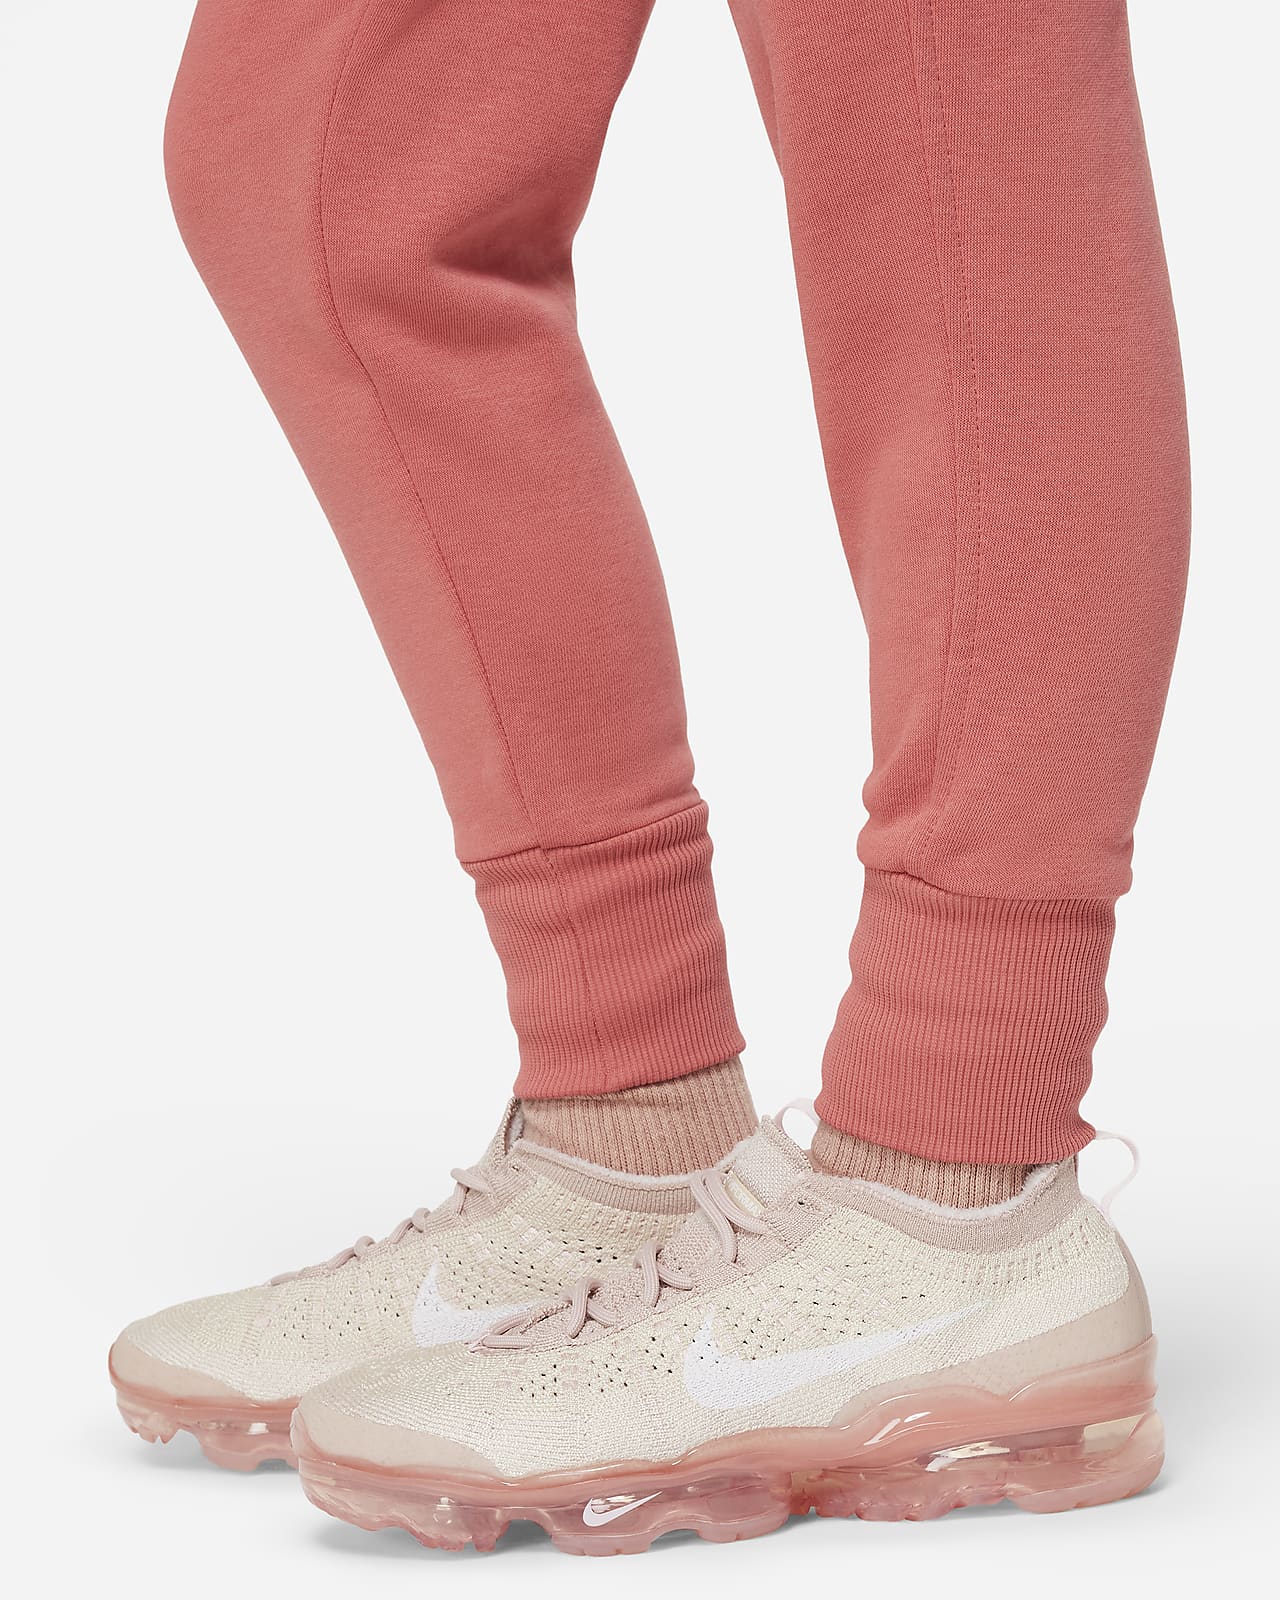 Nike, Bottoms, Nike Black Pink Leggings Athletic Pants Girls Size Xsmall  4